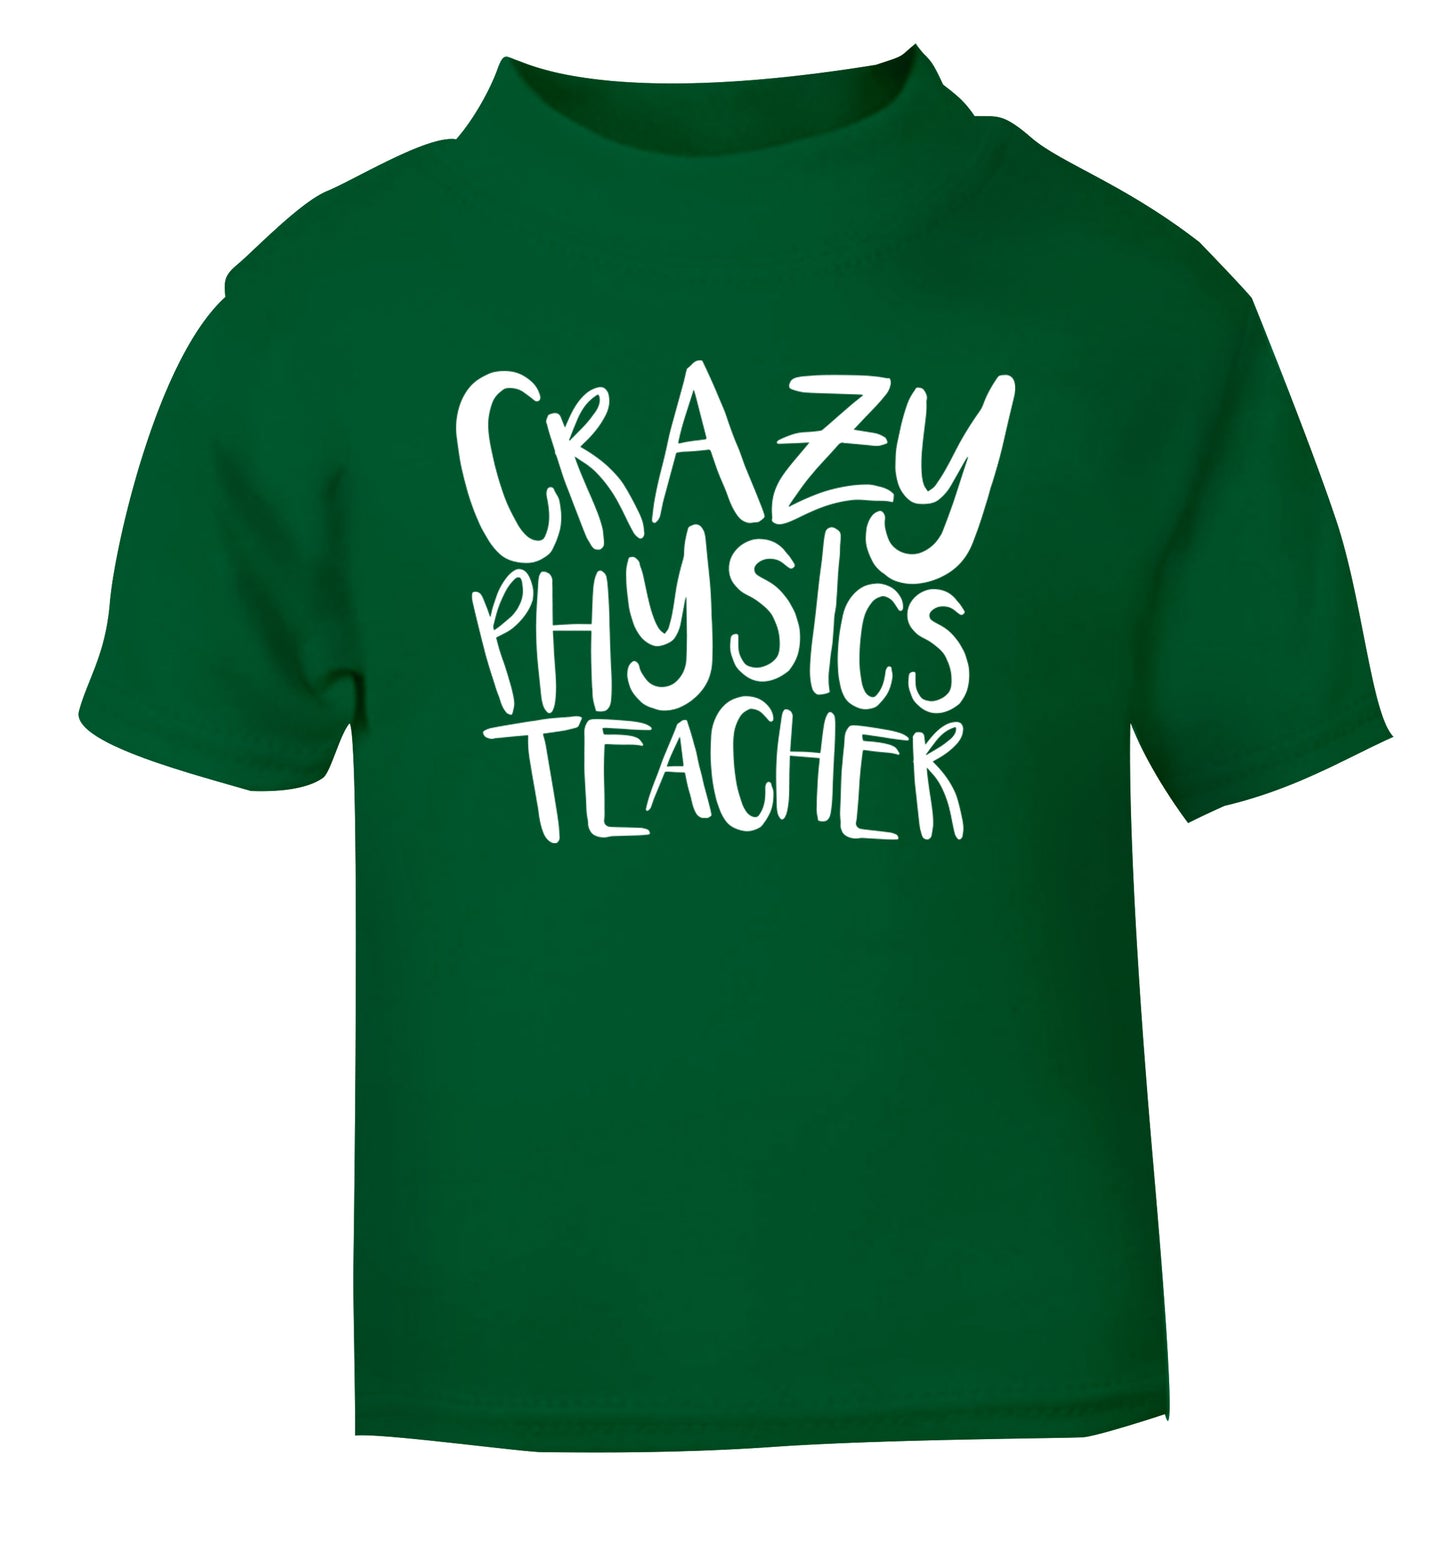 Crazy physics teacher green Baby Toddler Tshirt 2 Years